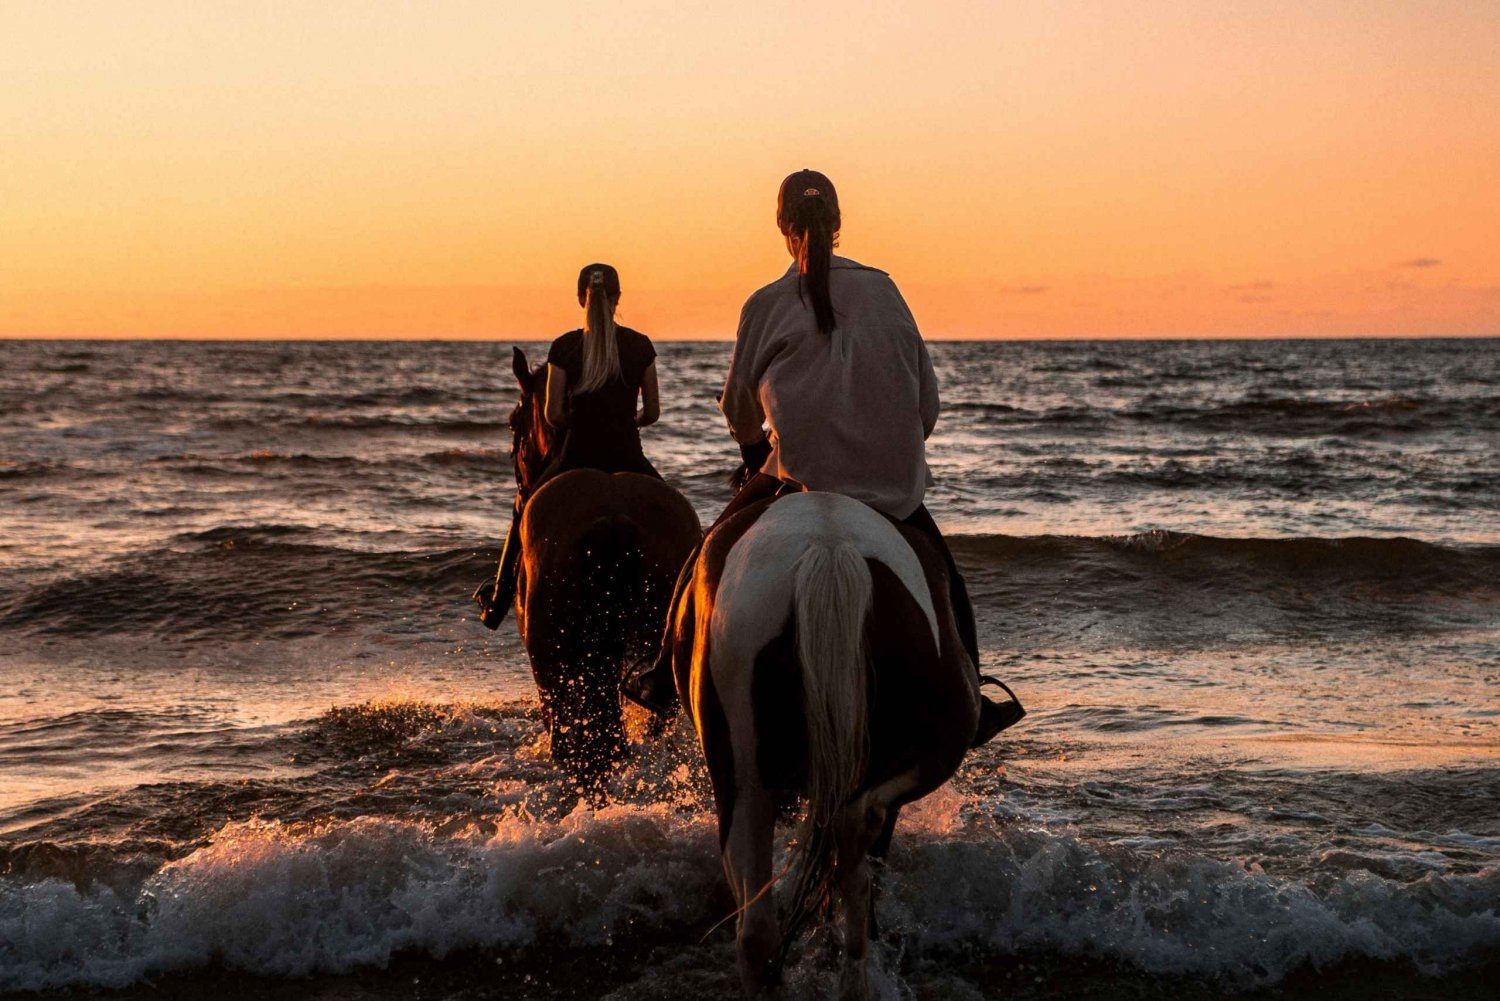 Bali: Horse Riding Jimbaran Beach Experience